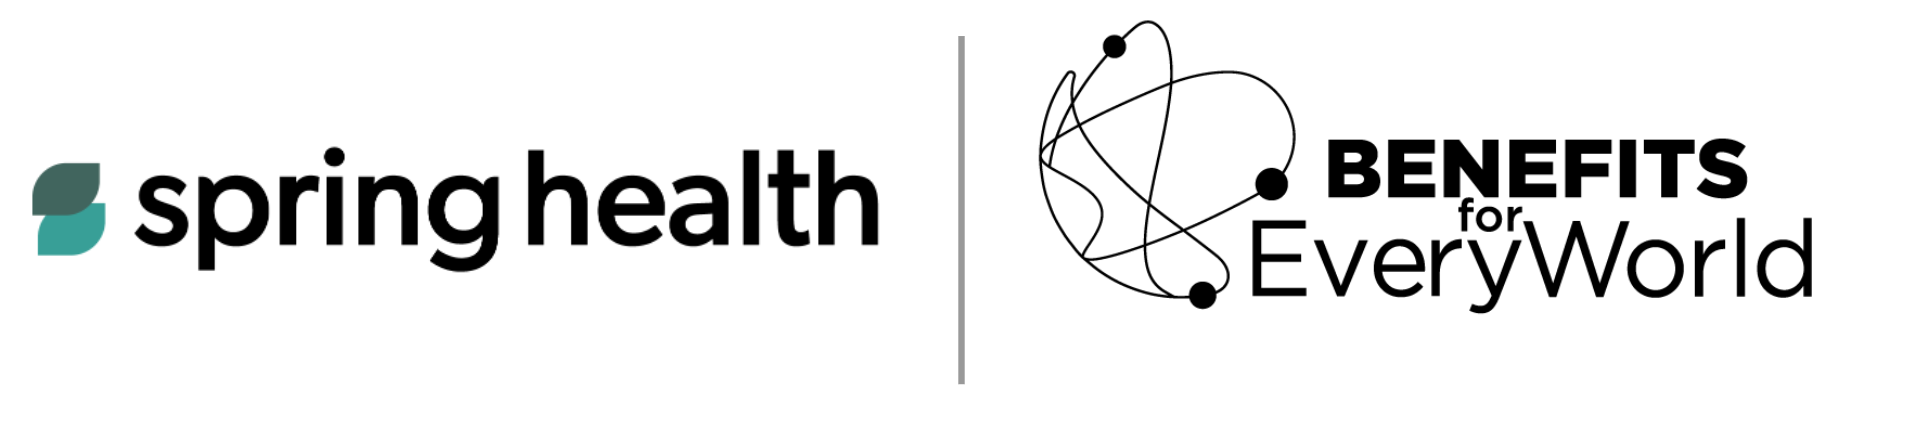 spring health logo